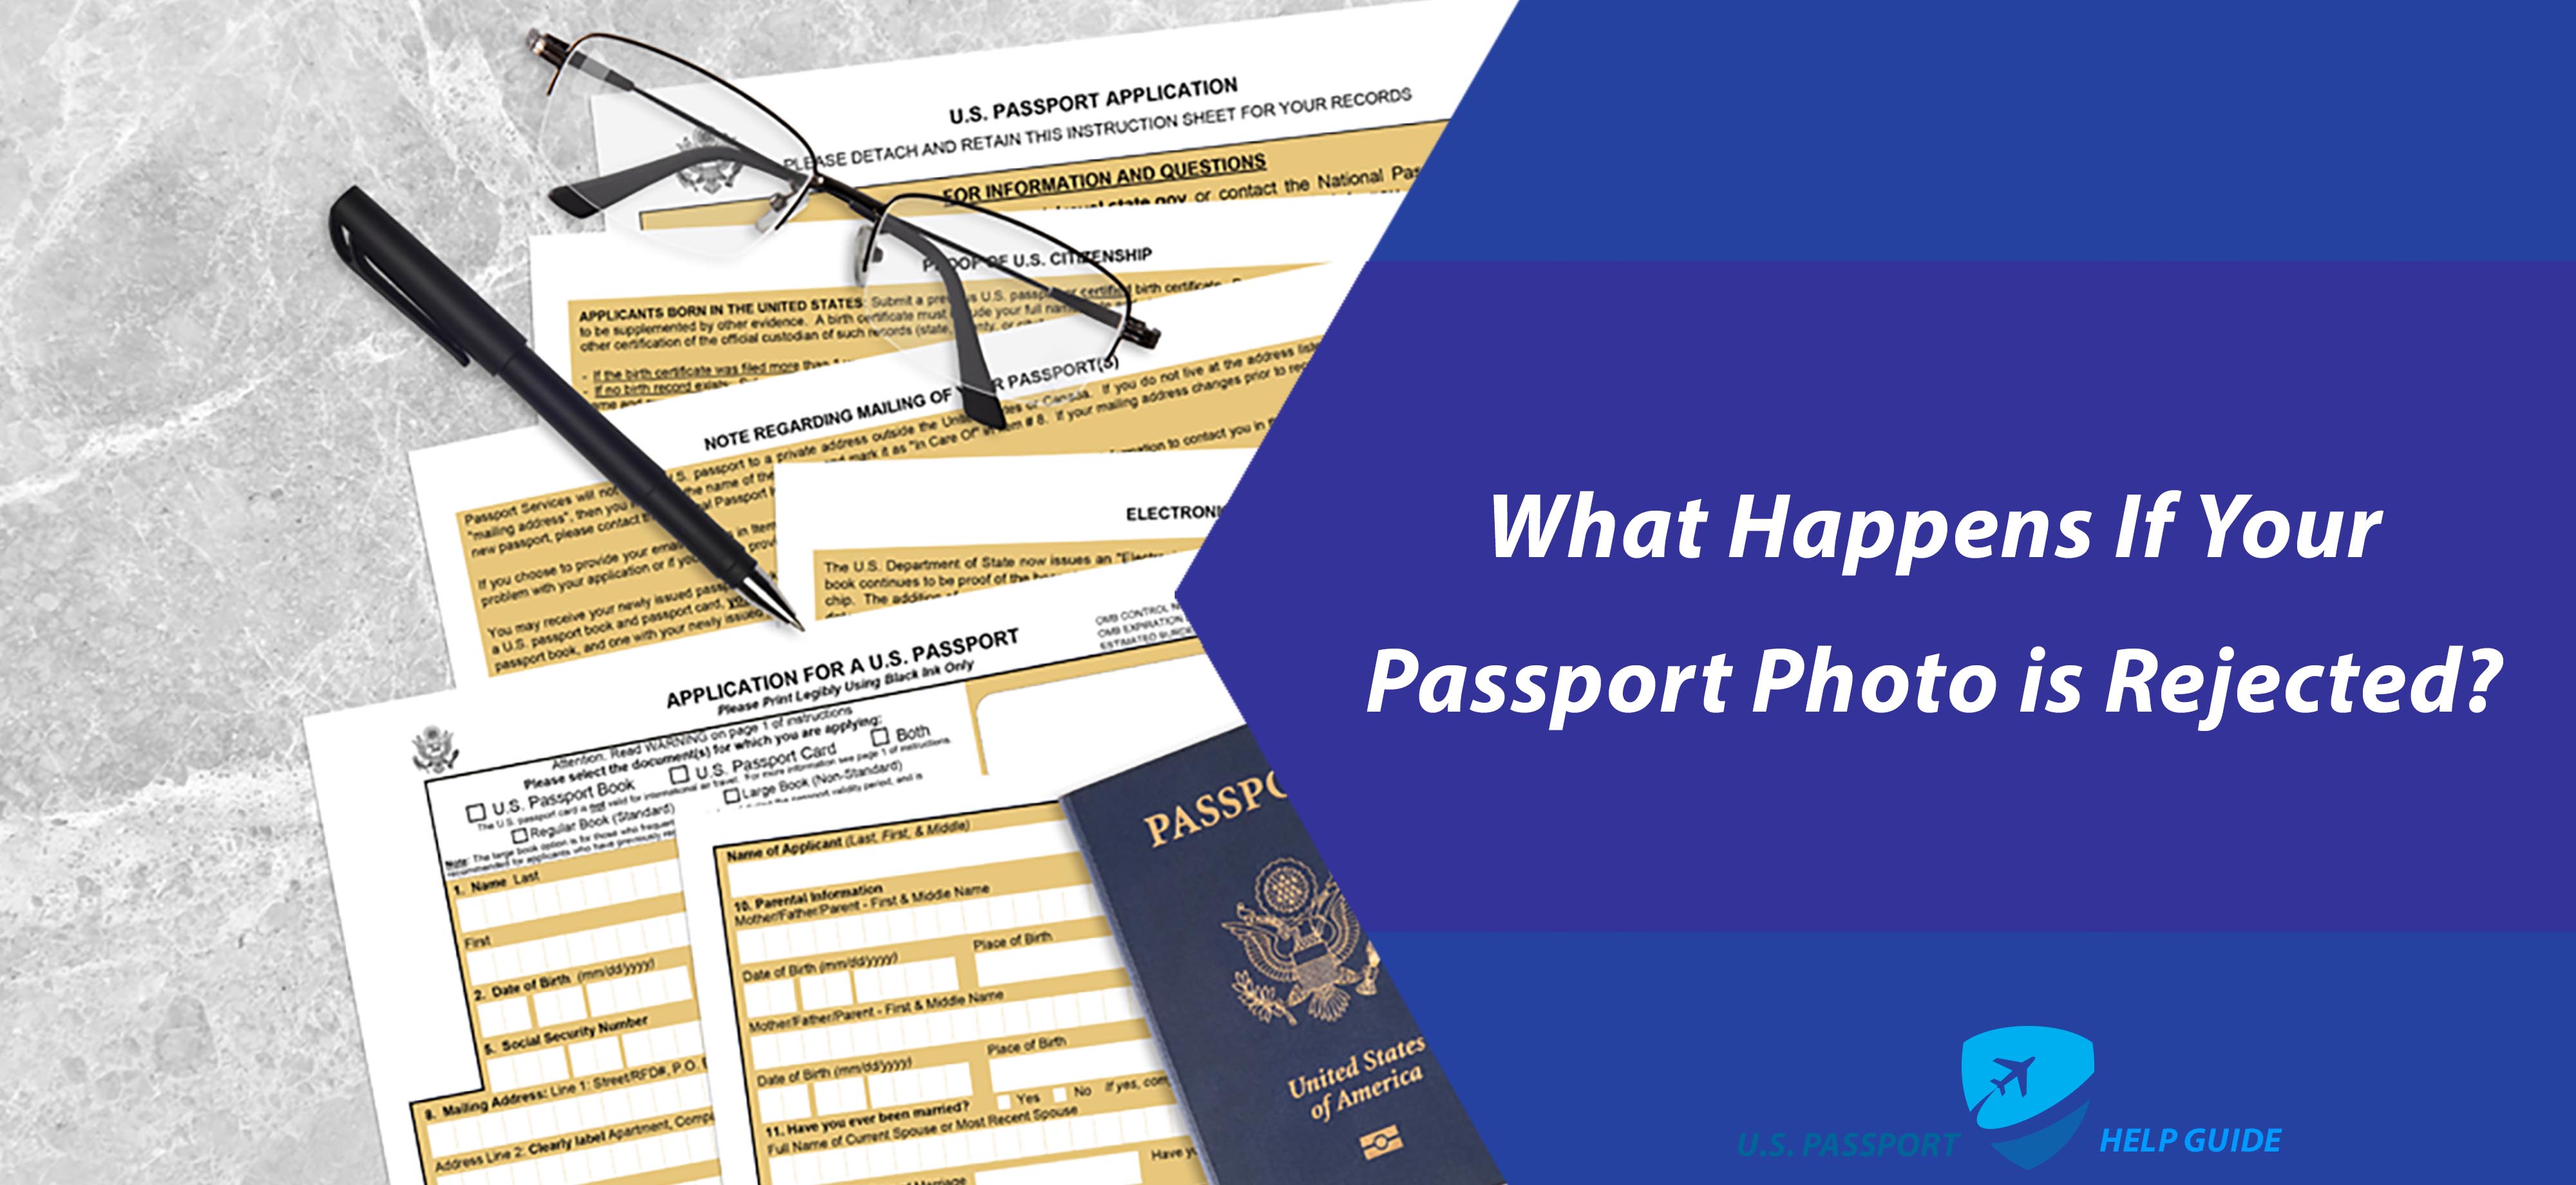 What happen if passport photo is rejected